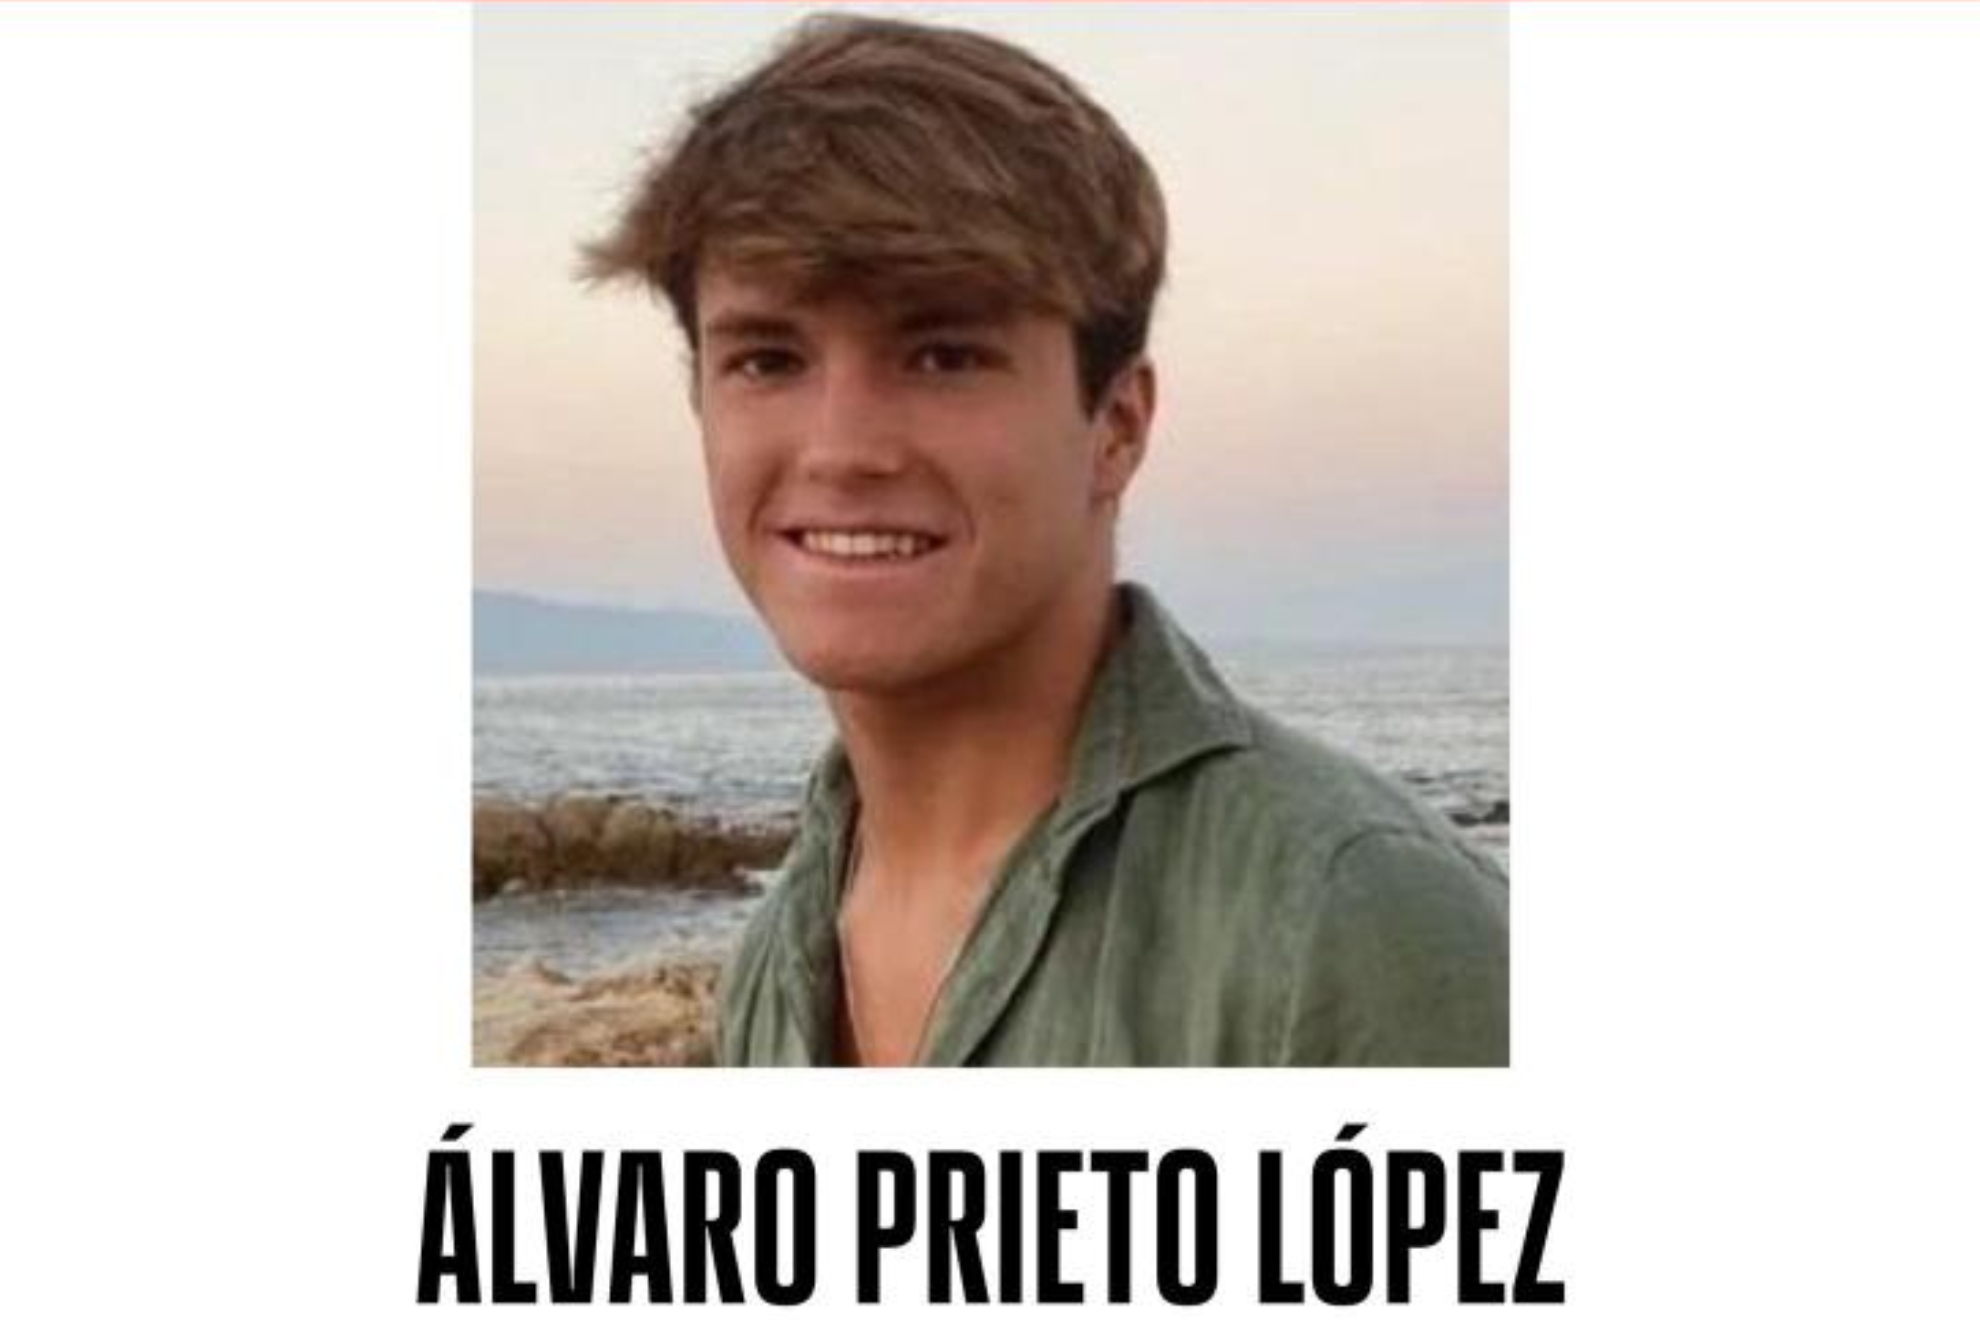 lvaro Prieto Lpez, en una imagen hecha pblica por su familia.